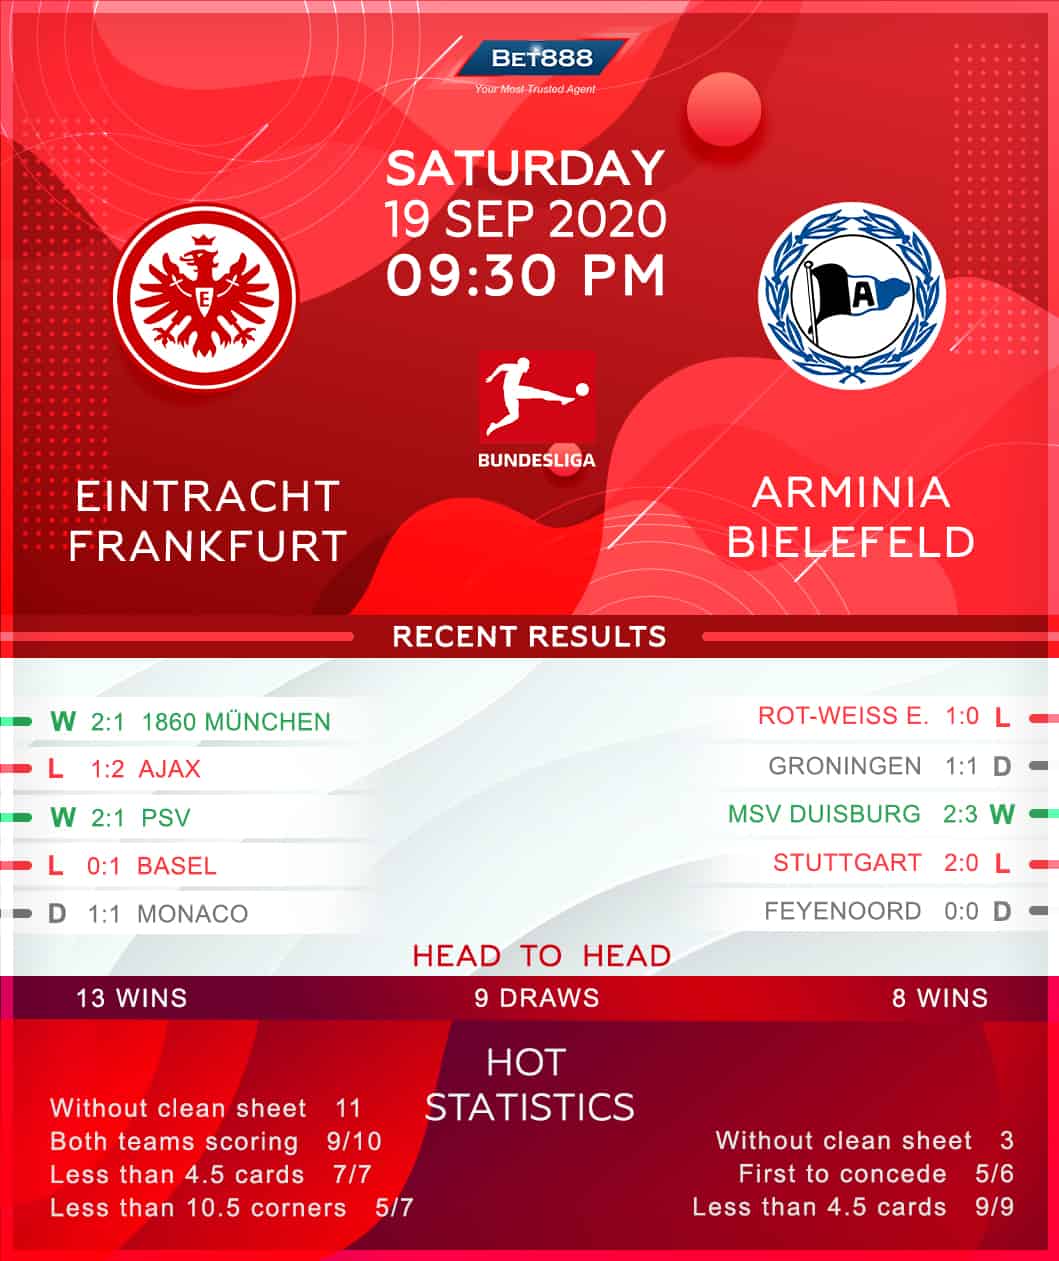 Eintracht Frankfurt vs Arminia Bielefeld 19/09/20